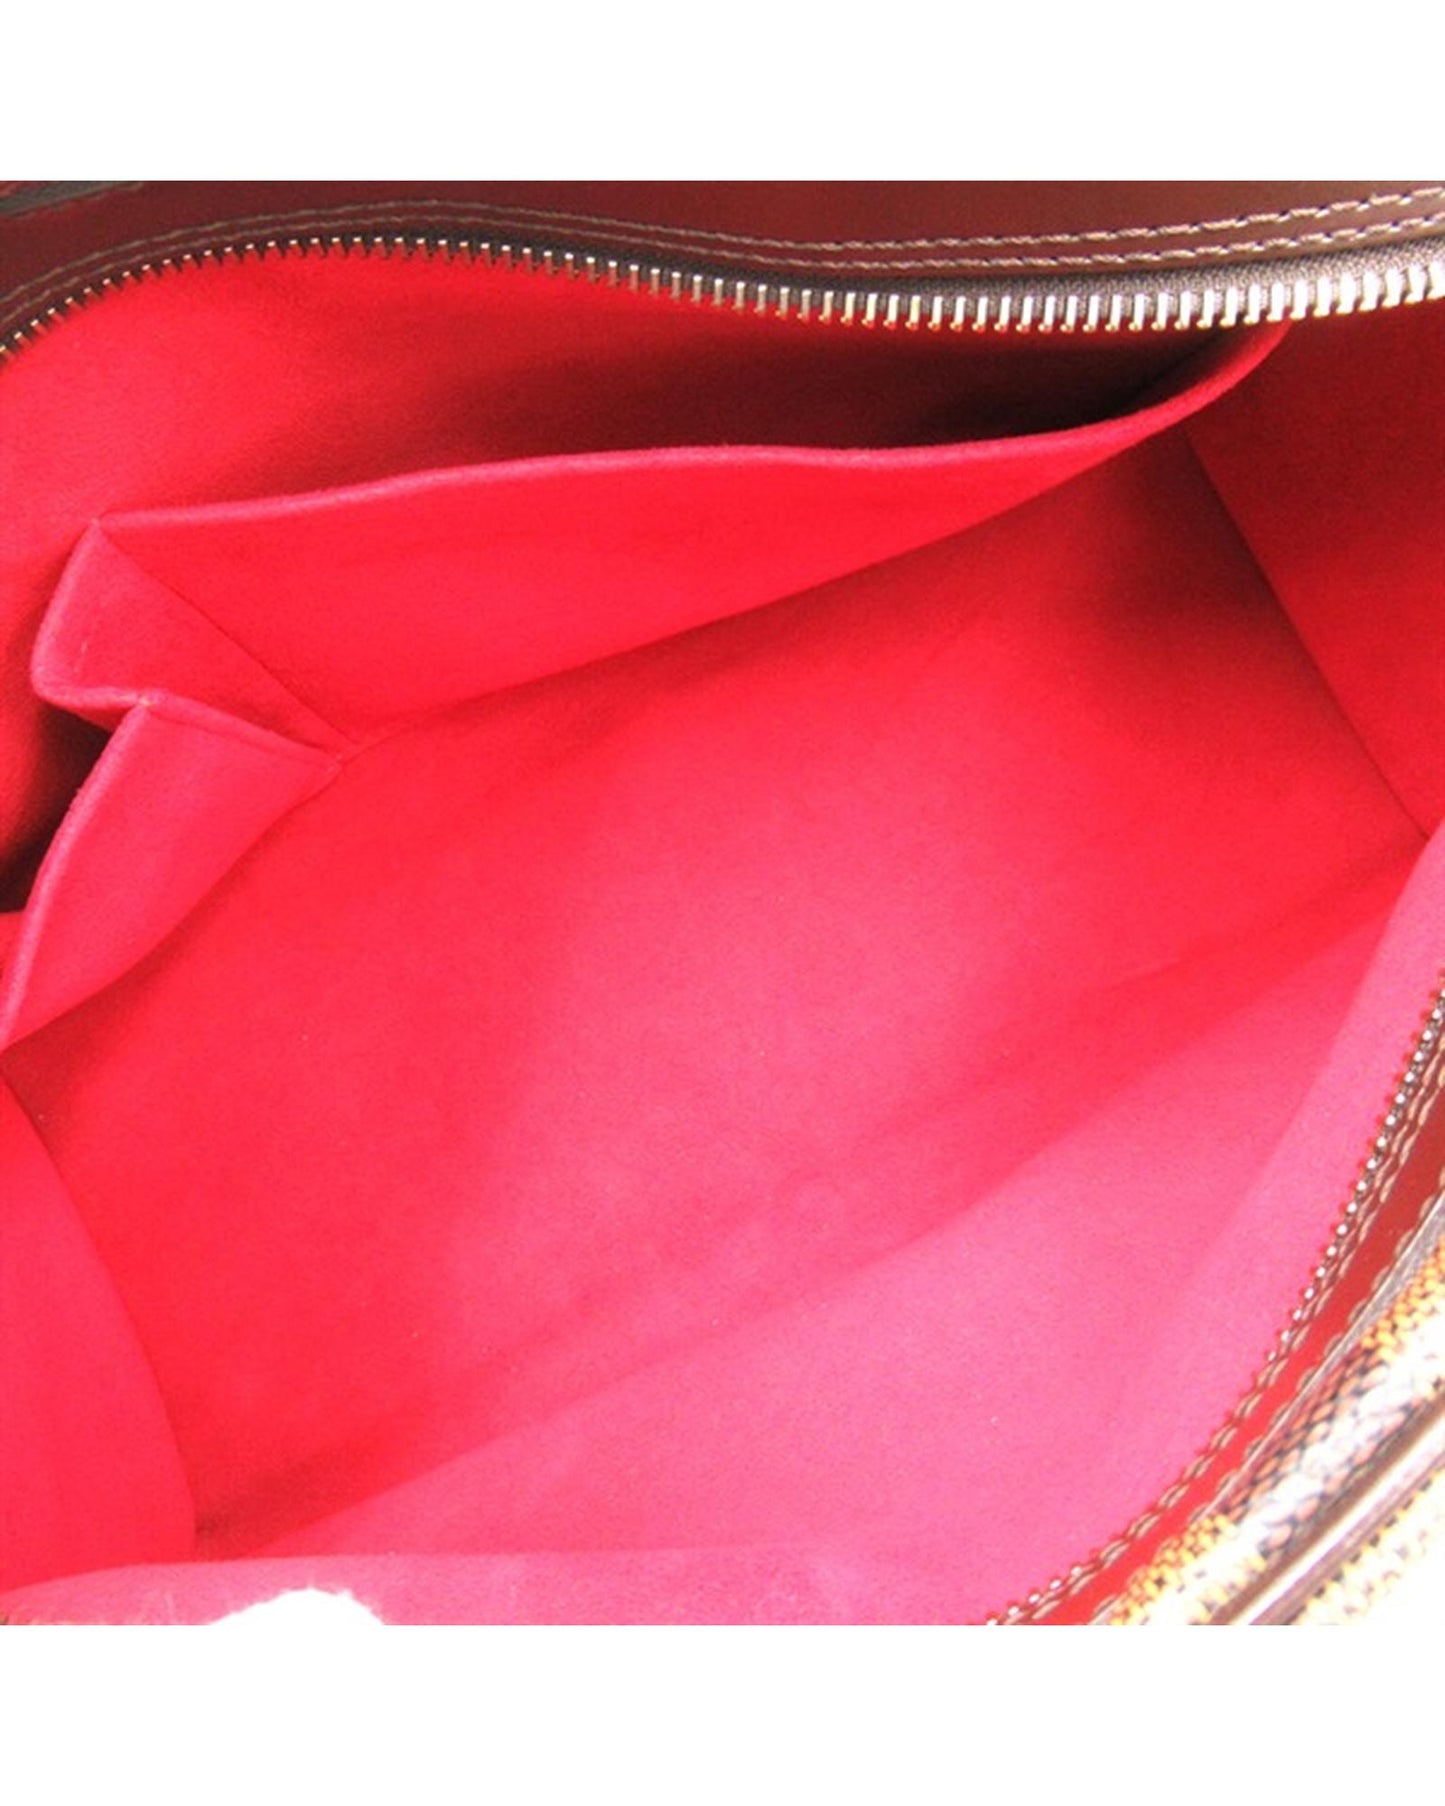 Louis Vuitton Women's Brown Damier Ebene Duomo Bag in Excellent Condition in Brown